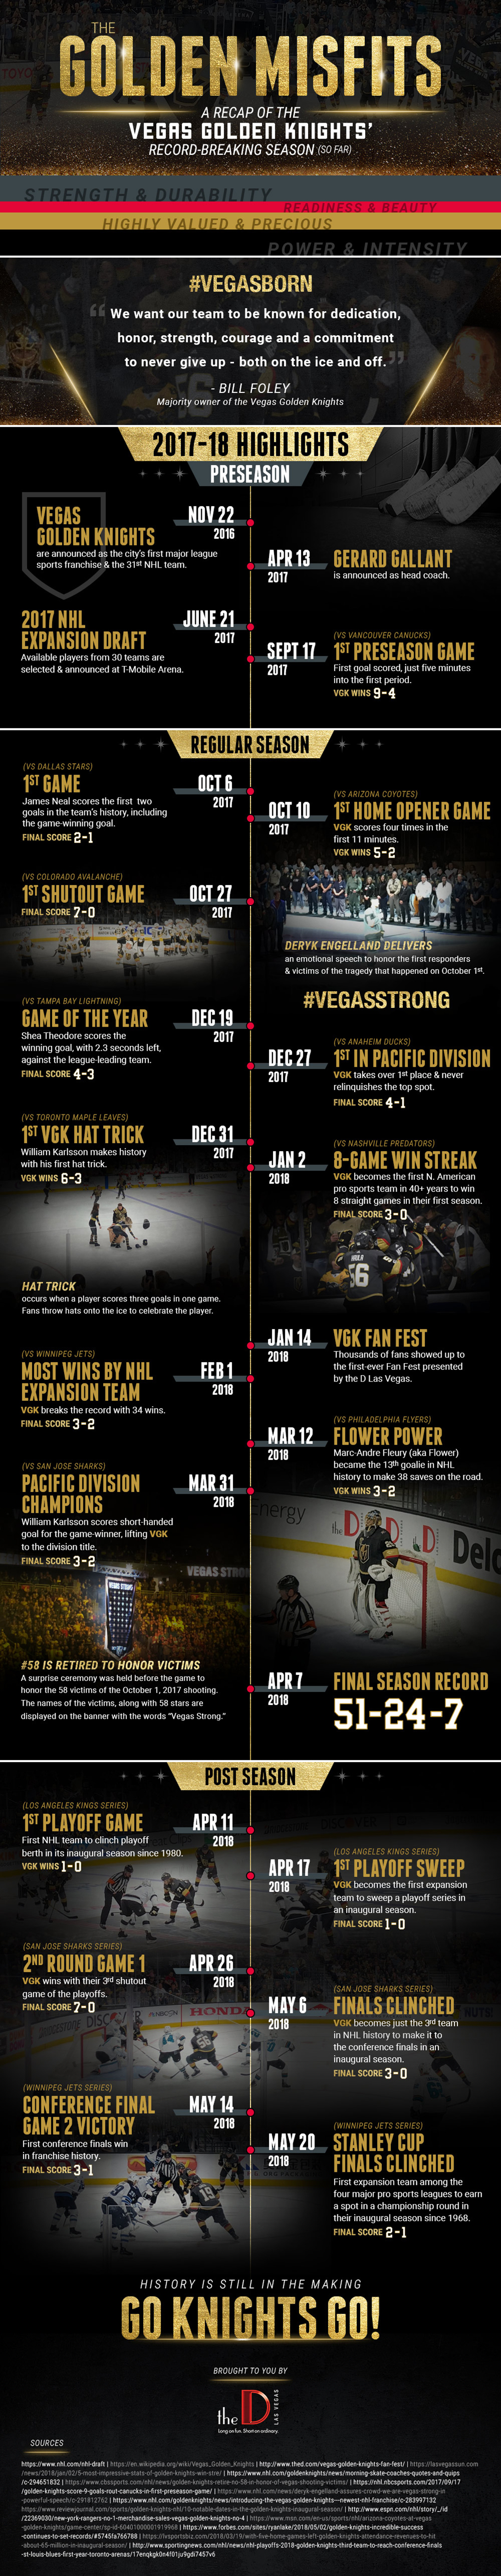 Golden Misftis - A Recap of The Vegas Golden Knights' Record-Breaking Season (so far) [Infographic]